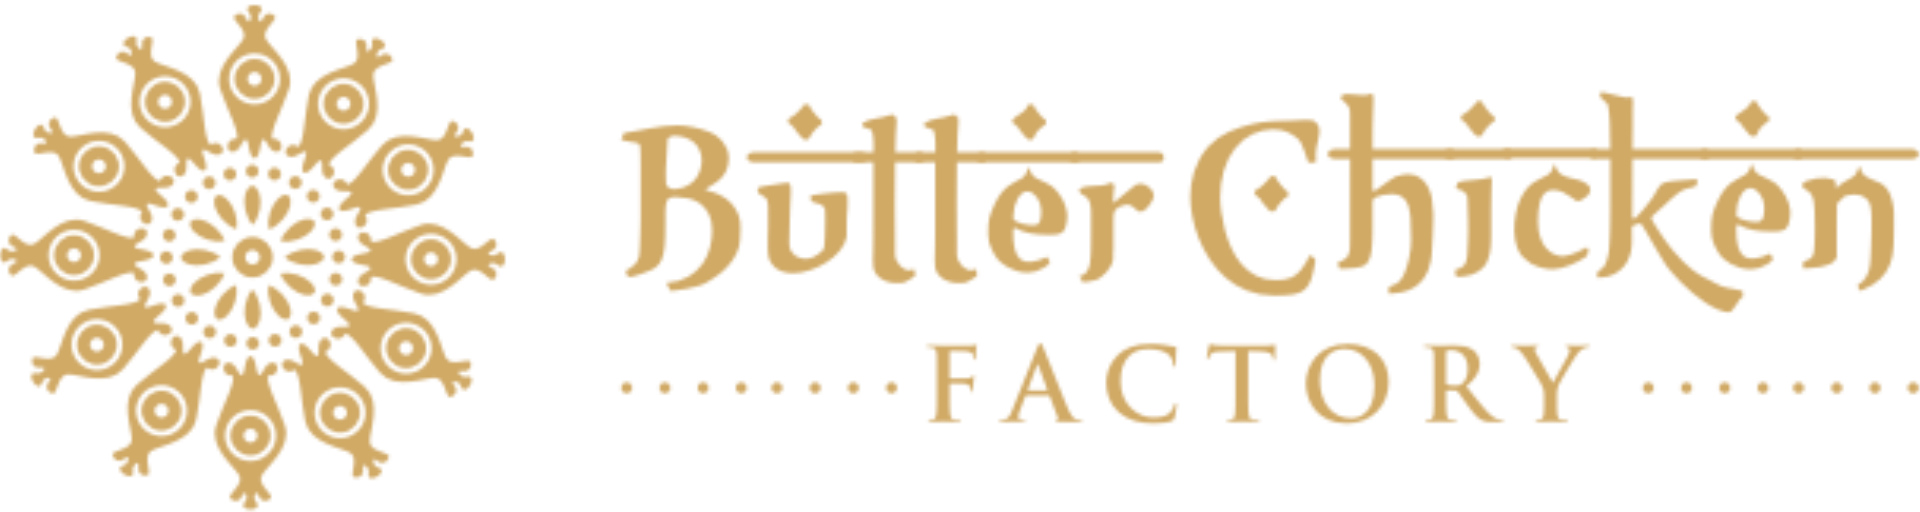 Butter Chicken Factory Restaurant - Picture